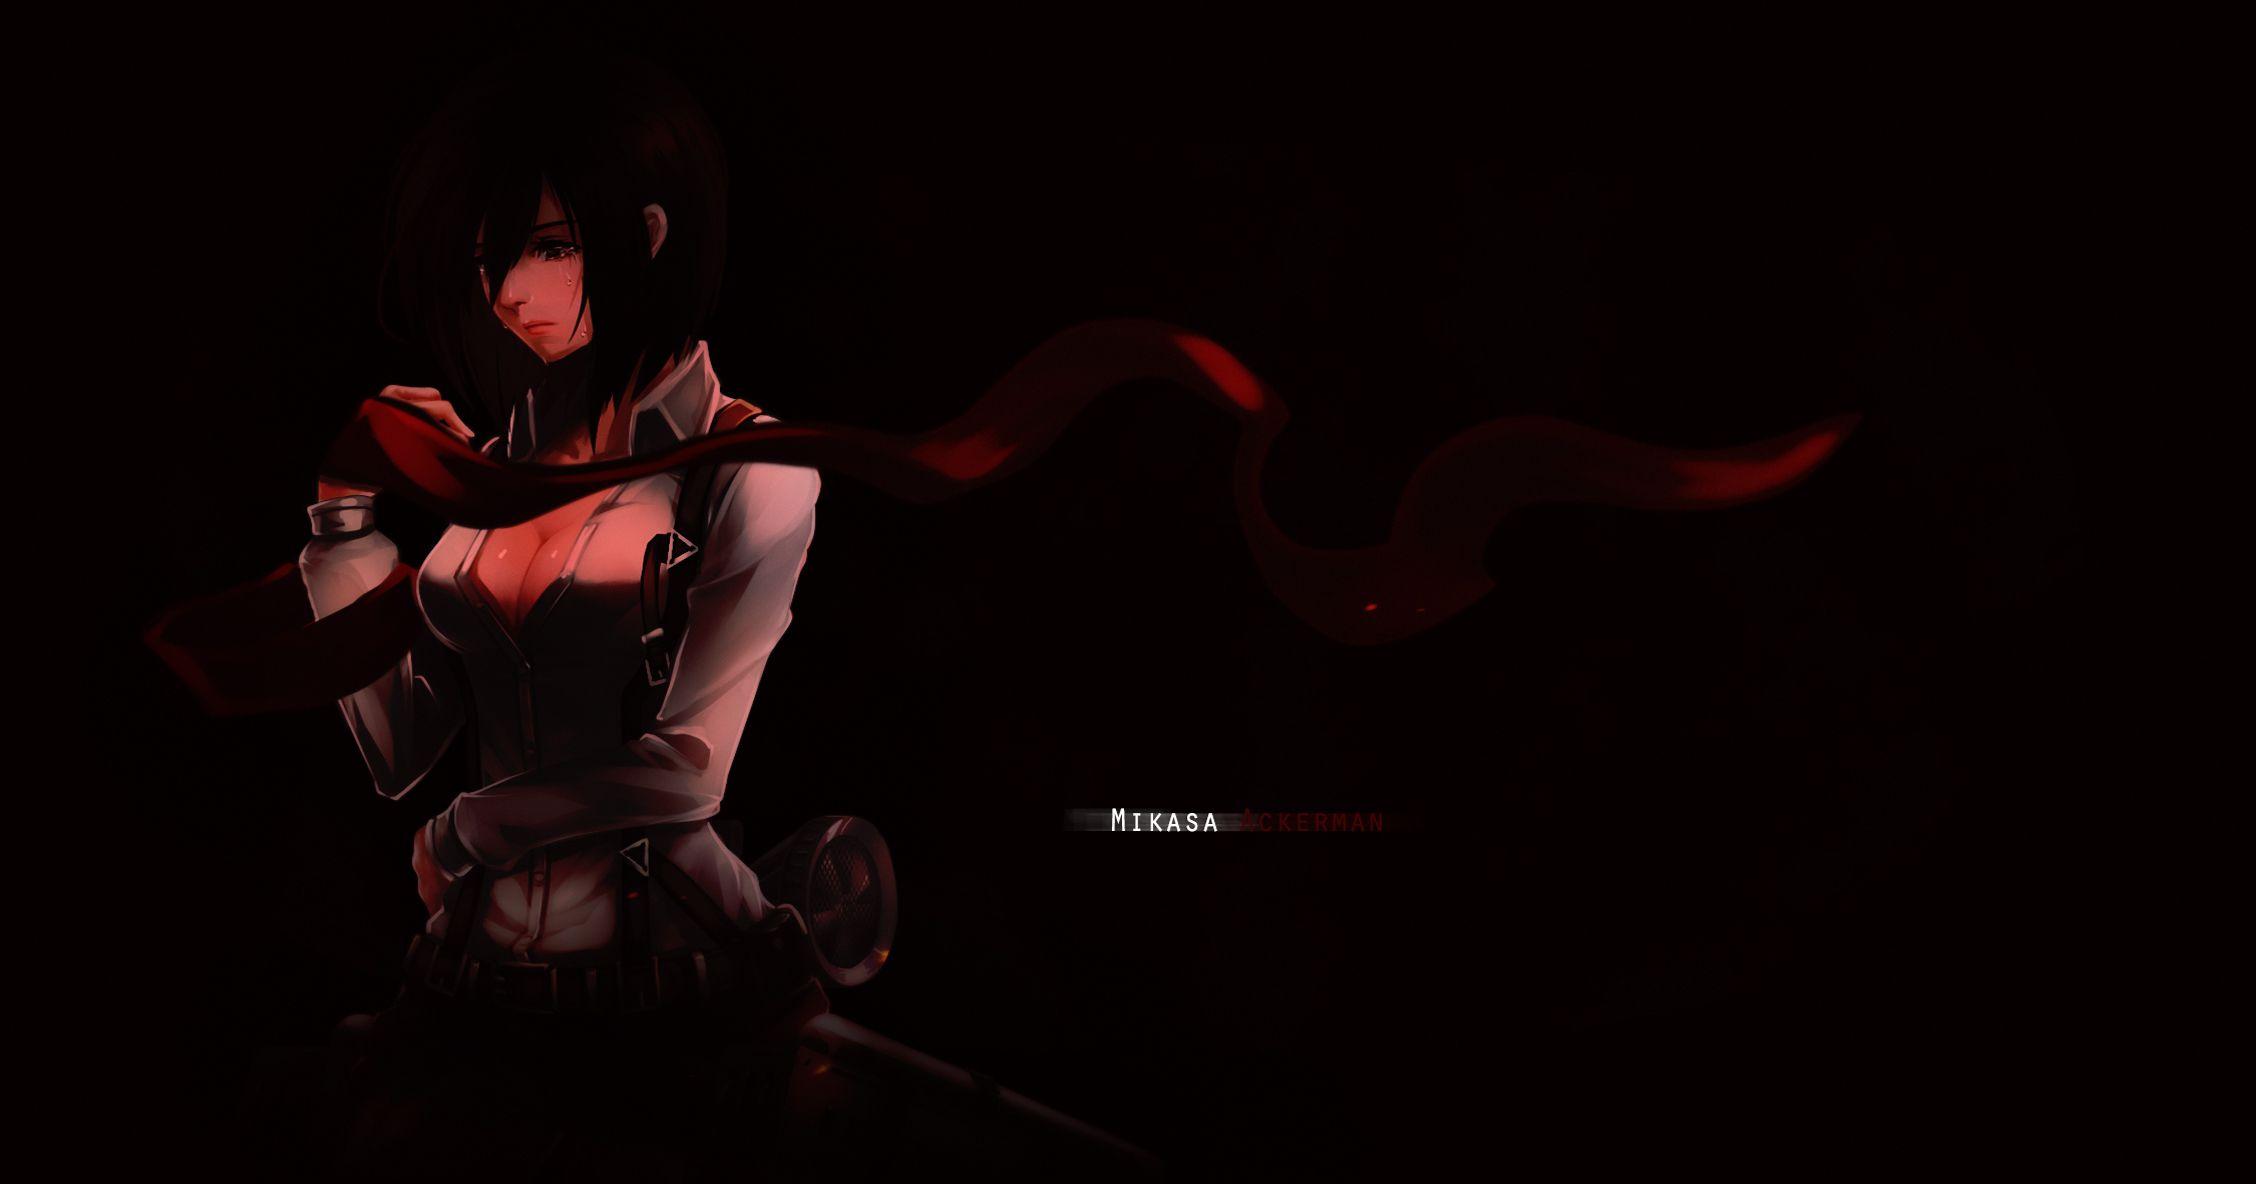 Mikasa ackerman Wallpaper HD, Desktop Background, Image and 2256x1184